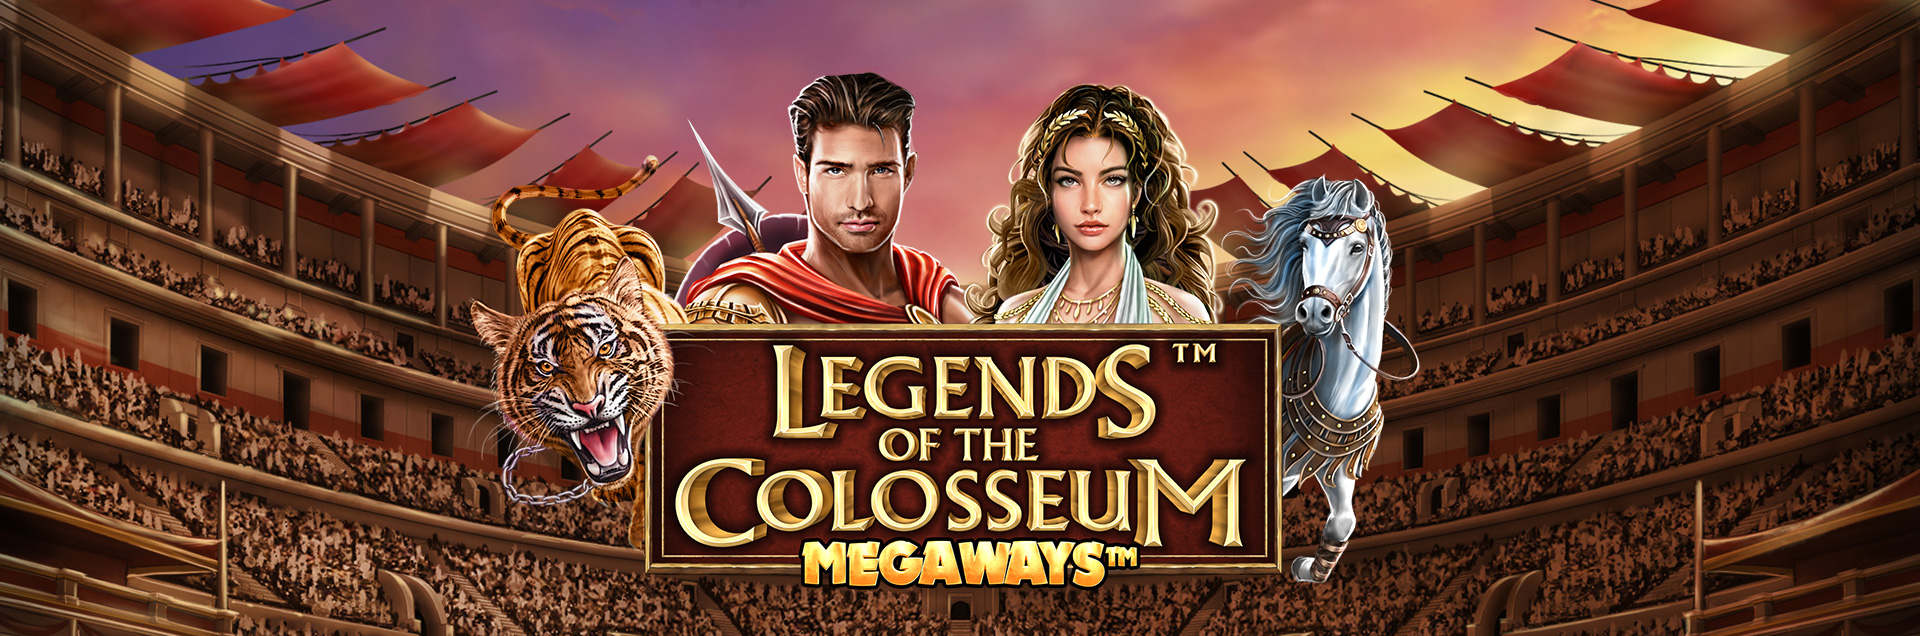 Legends of the Colosseum games header